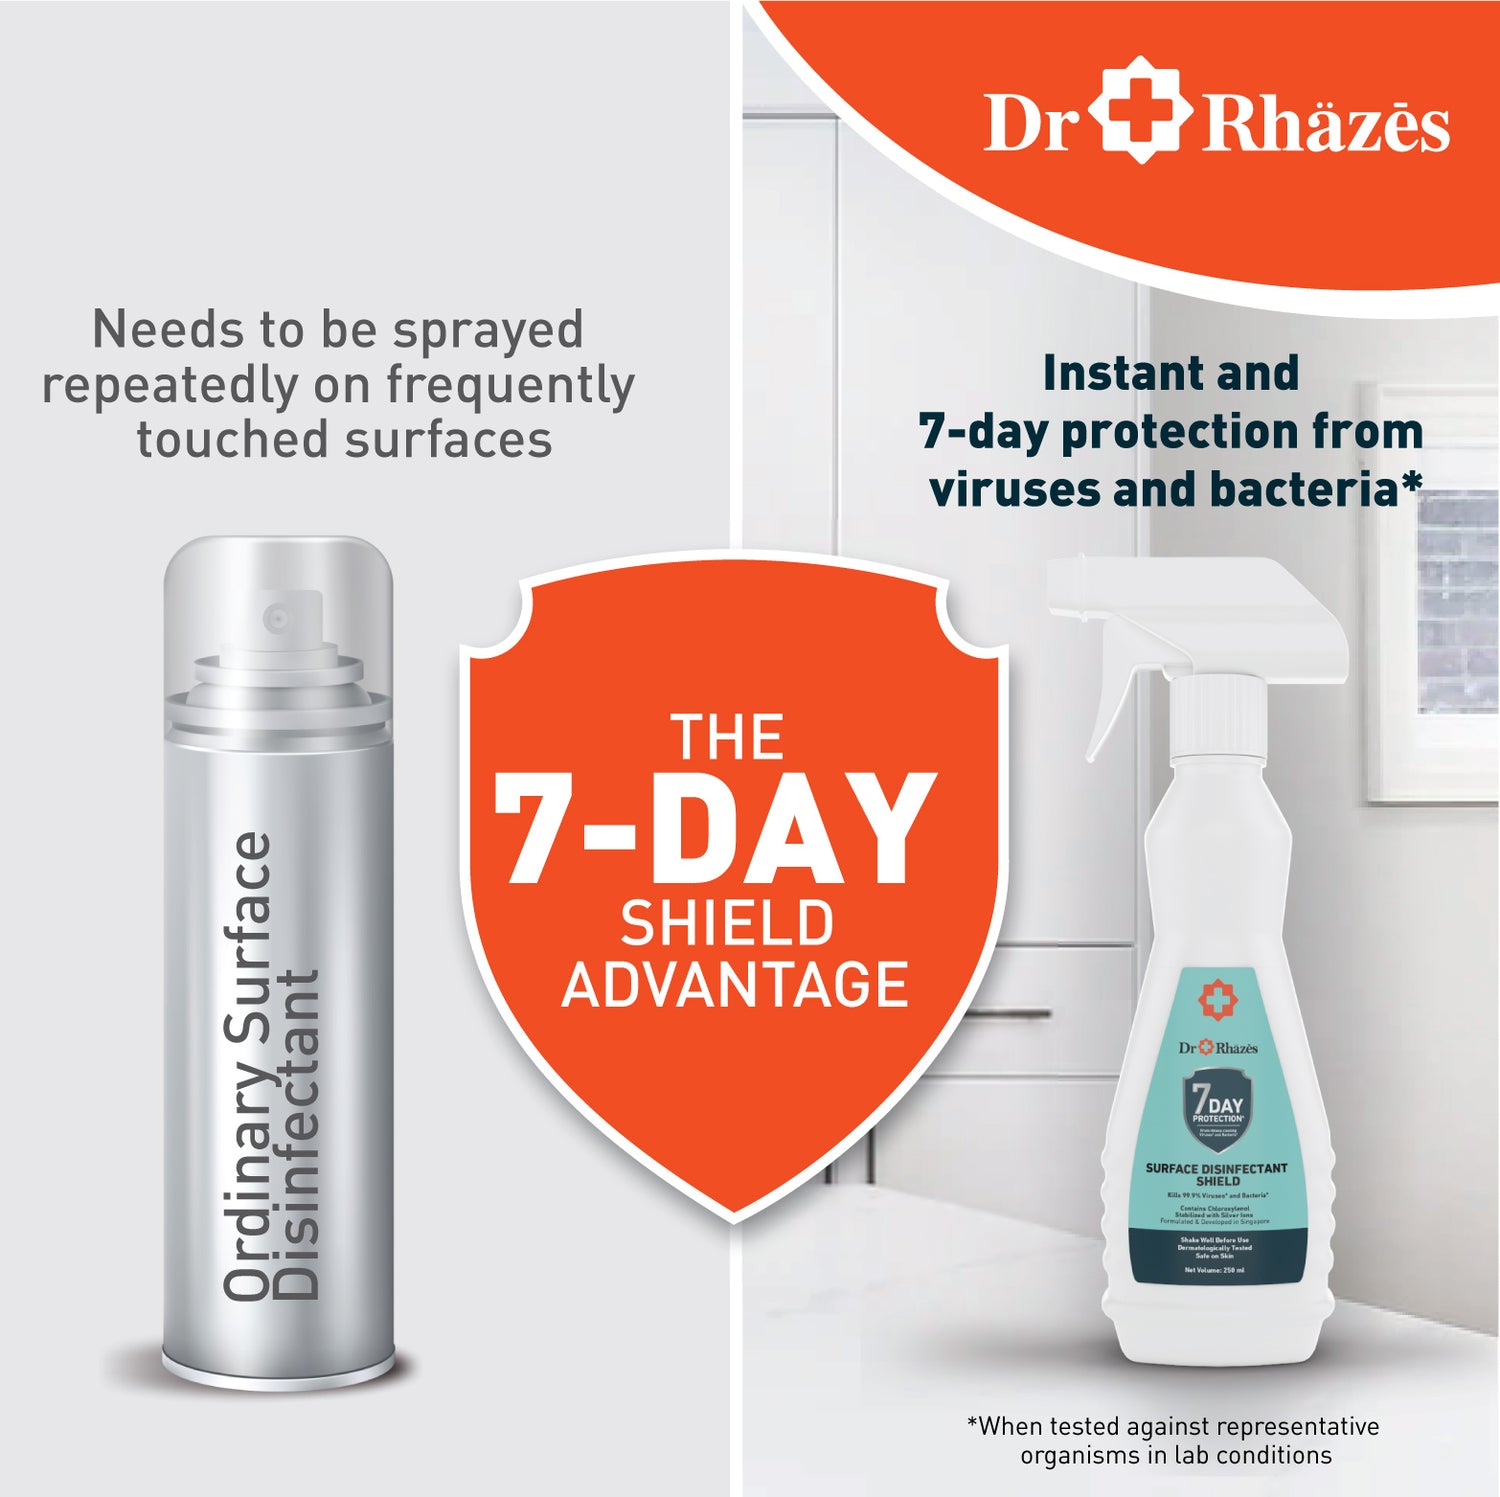 Dr Rh√§zƒìs 7 Day Surface Disinfectant Shield - Trigger Spray